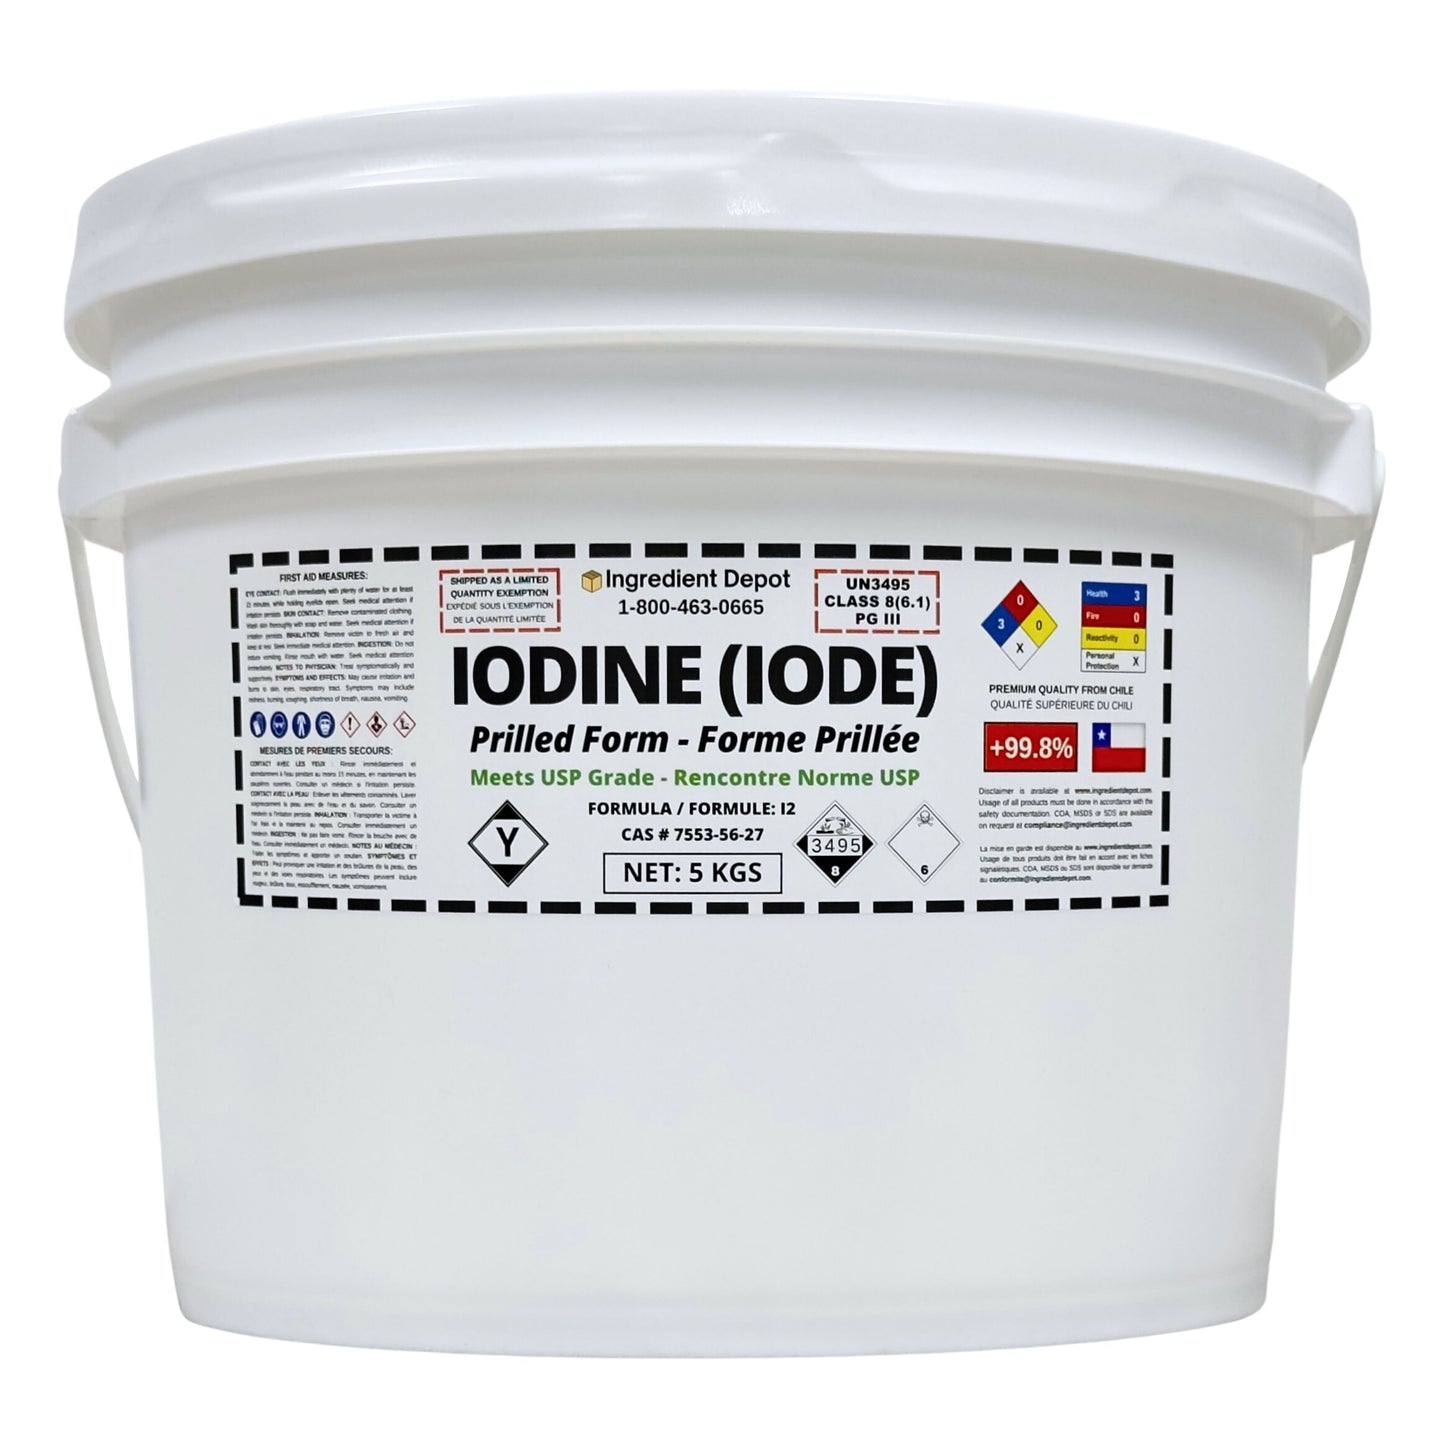 Iodine Prilled 99.8% USP Grade 5 kgs - IngredientDepot.com